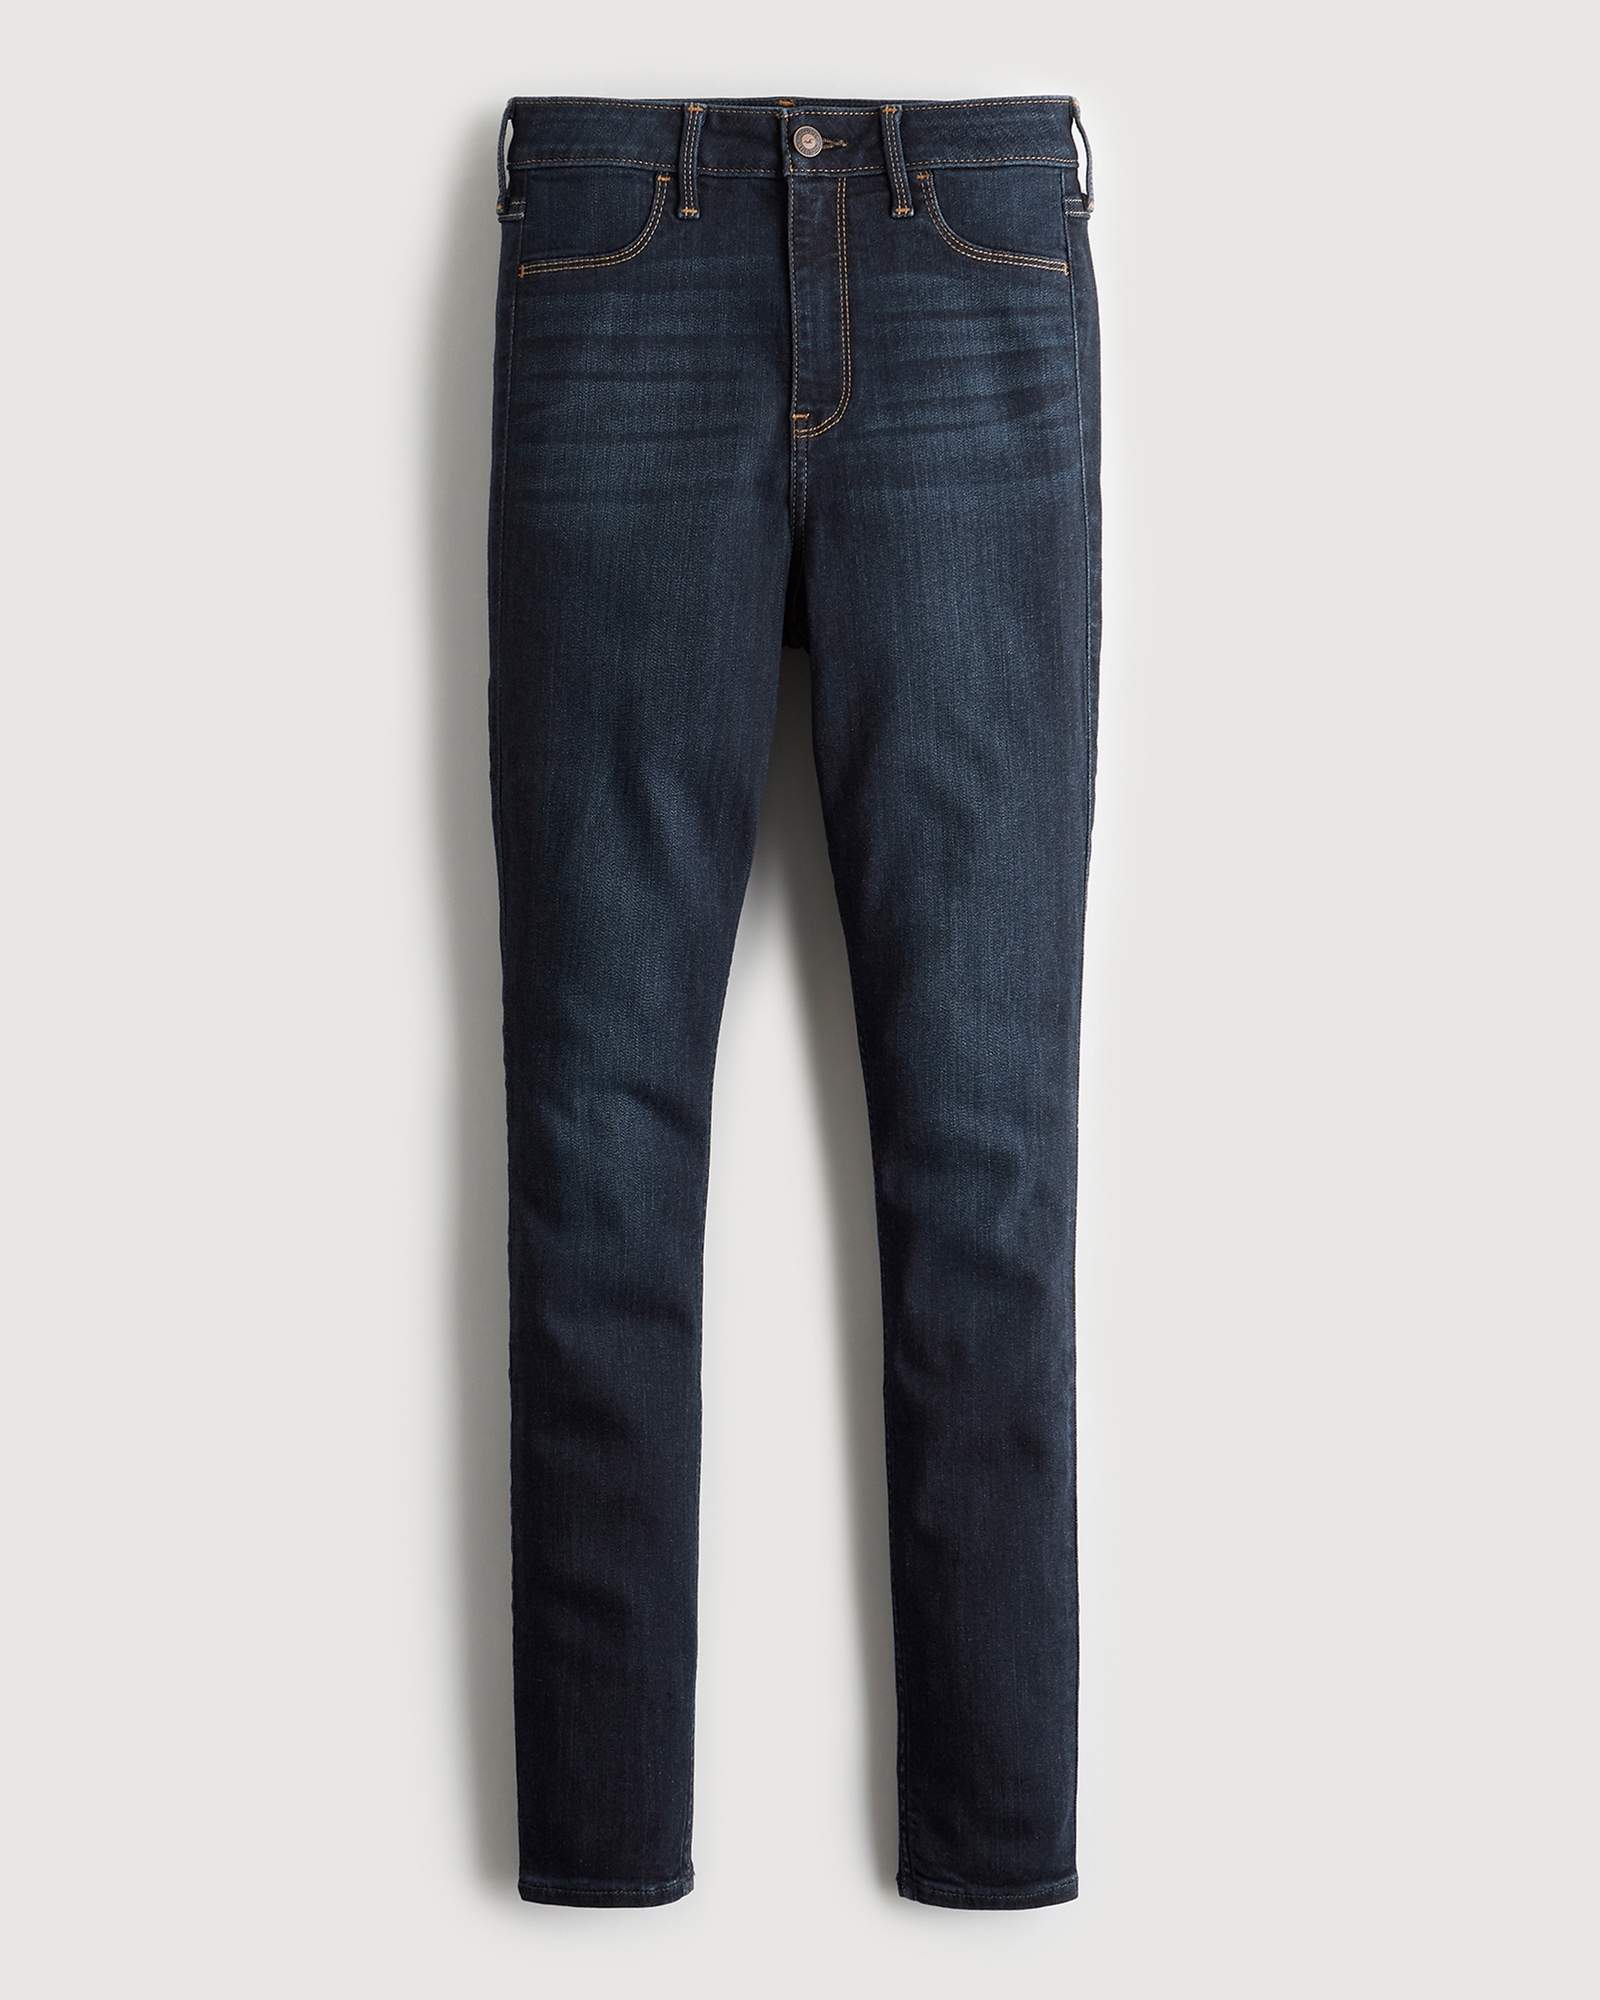 Hollister 0 short blue jeans DESTROYED Curvy High Rise Jeggings